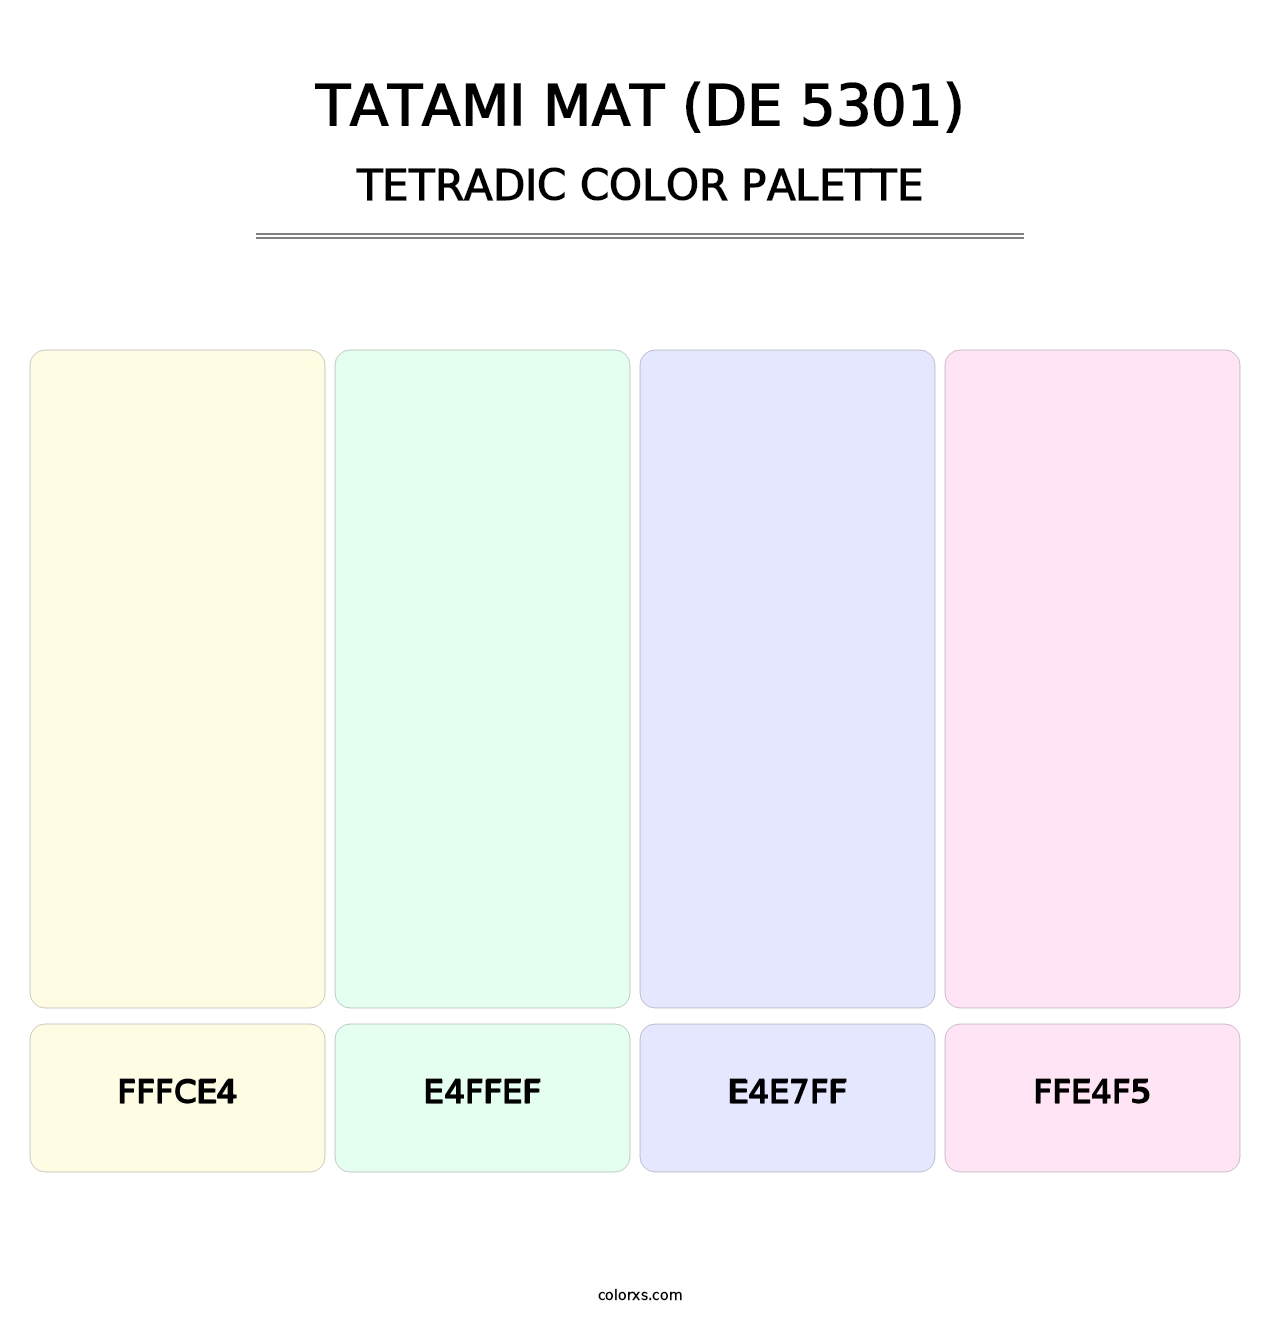 Tatami Mat (DE 5301) - Tetradic Color Palette